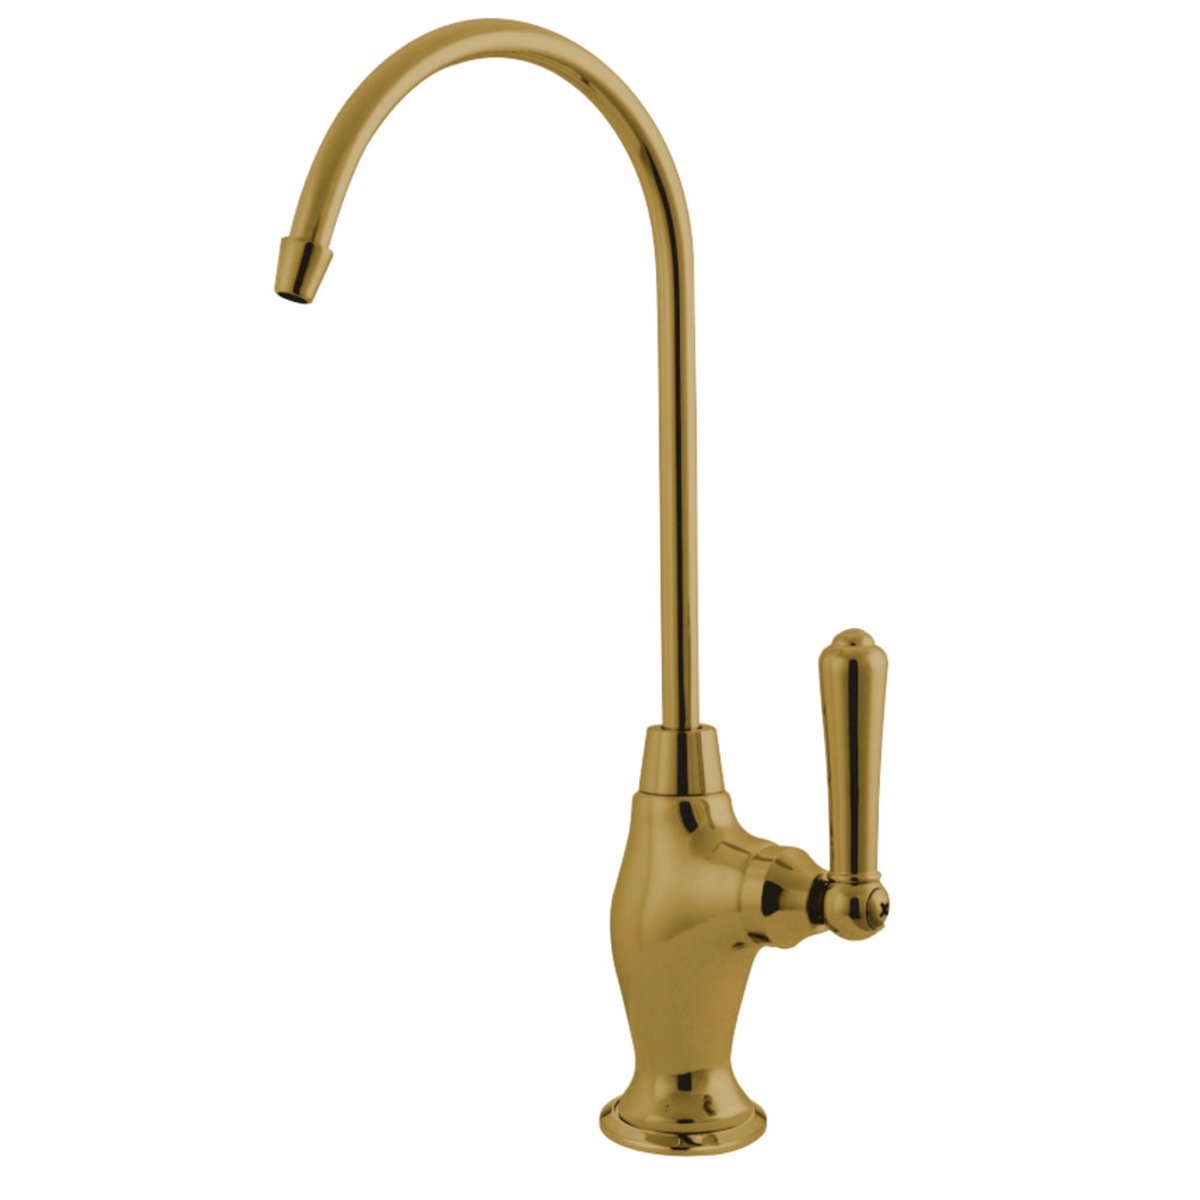 Kingston Brass Magellan Single Handle Water Filtration Faucet